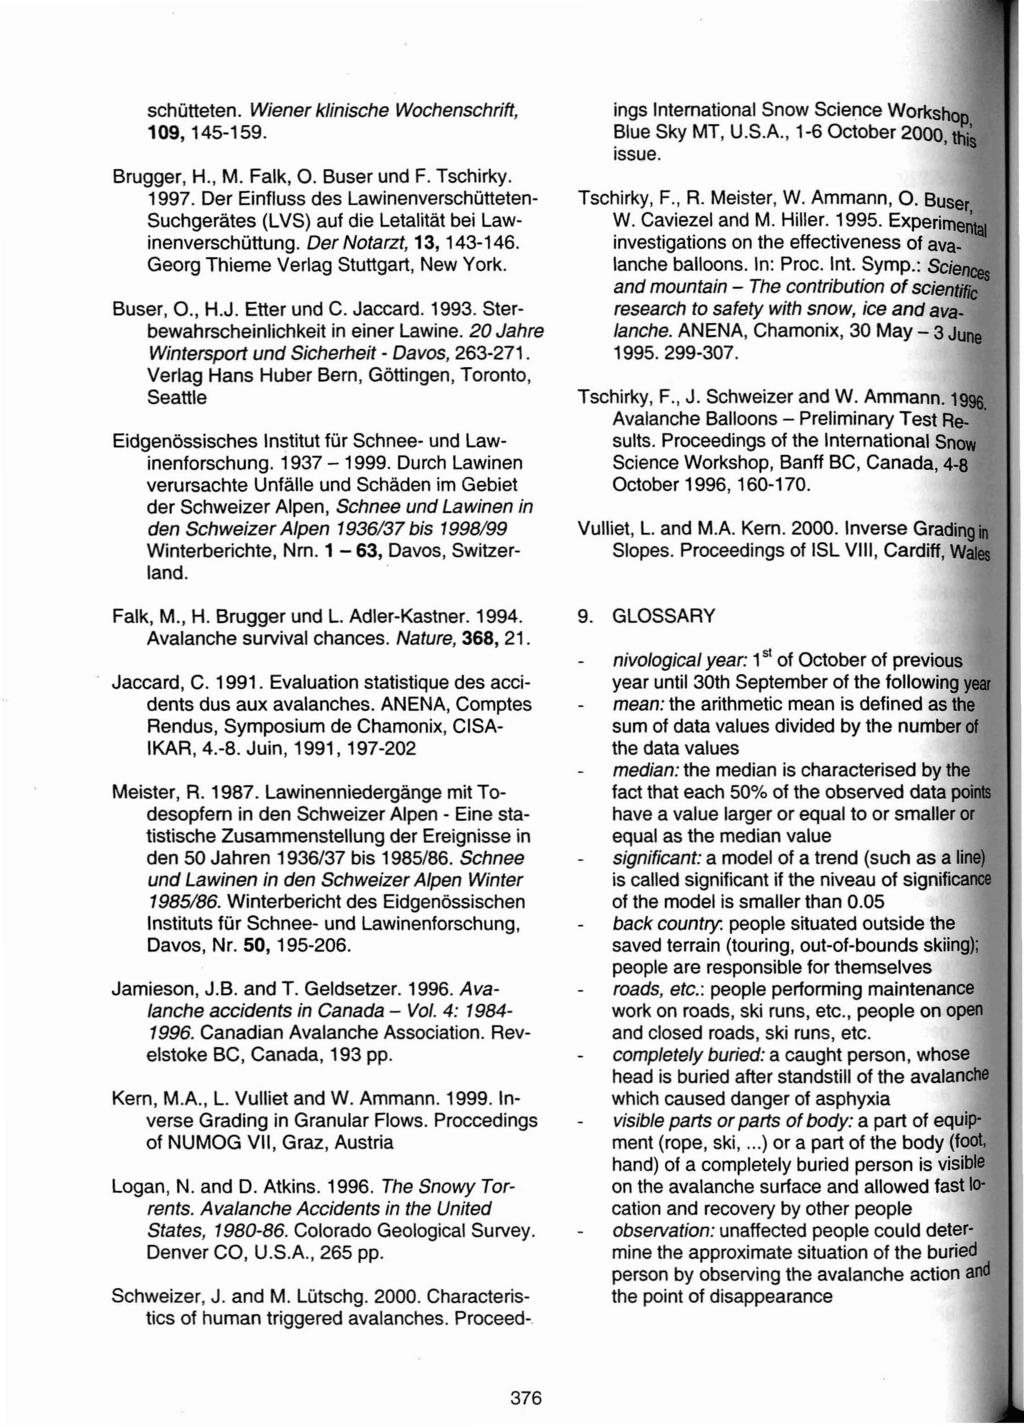 schutteten. Wiener klinische Wochenschrift, 109,145-159. Brugger, H., M. Falk, O. Buser und F. Tschirky. 1997.